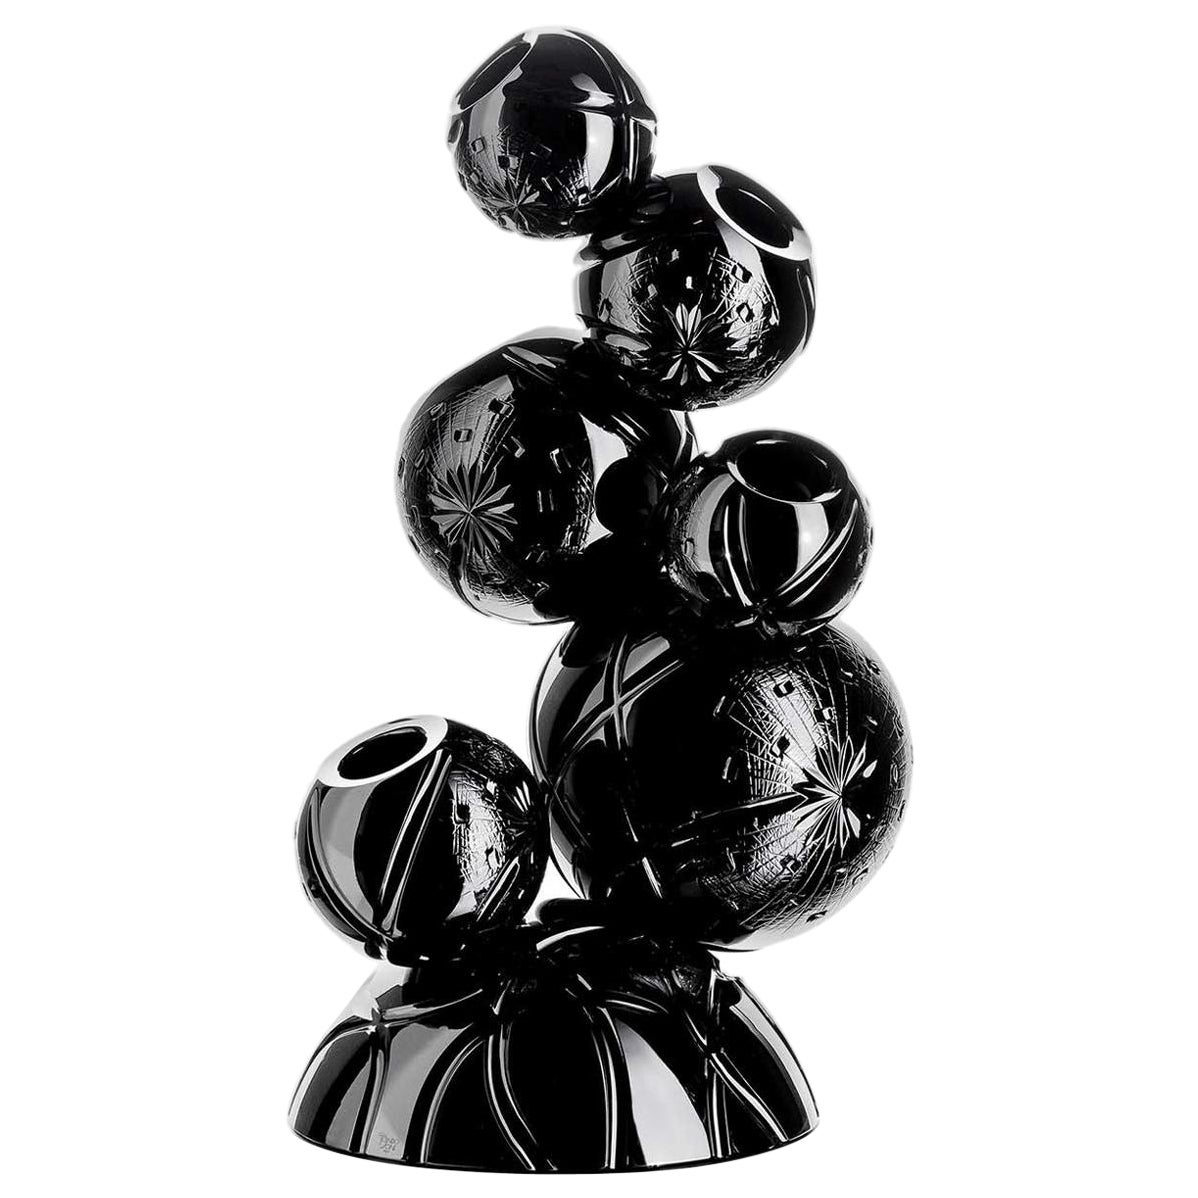 Tondo Doni: schwarze Tondo Doni-Vase mit Rautenmotiv von Mario Cioni